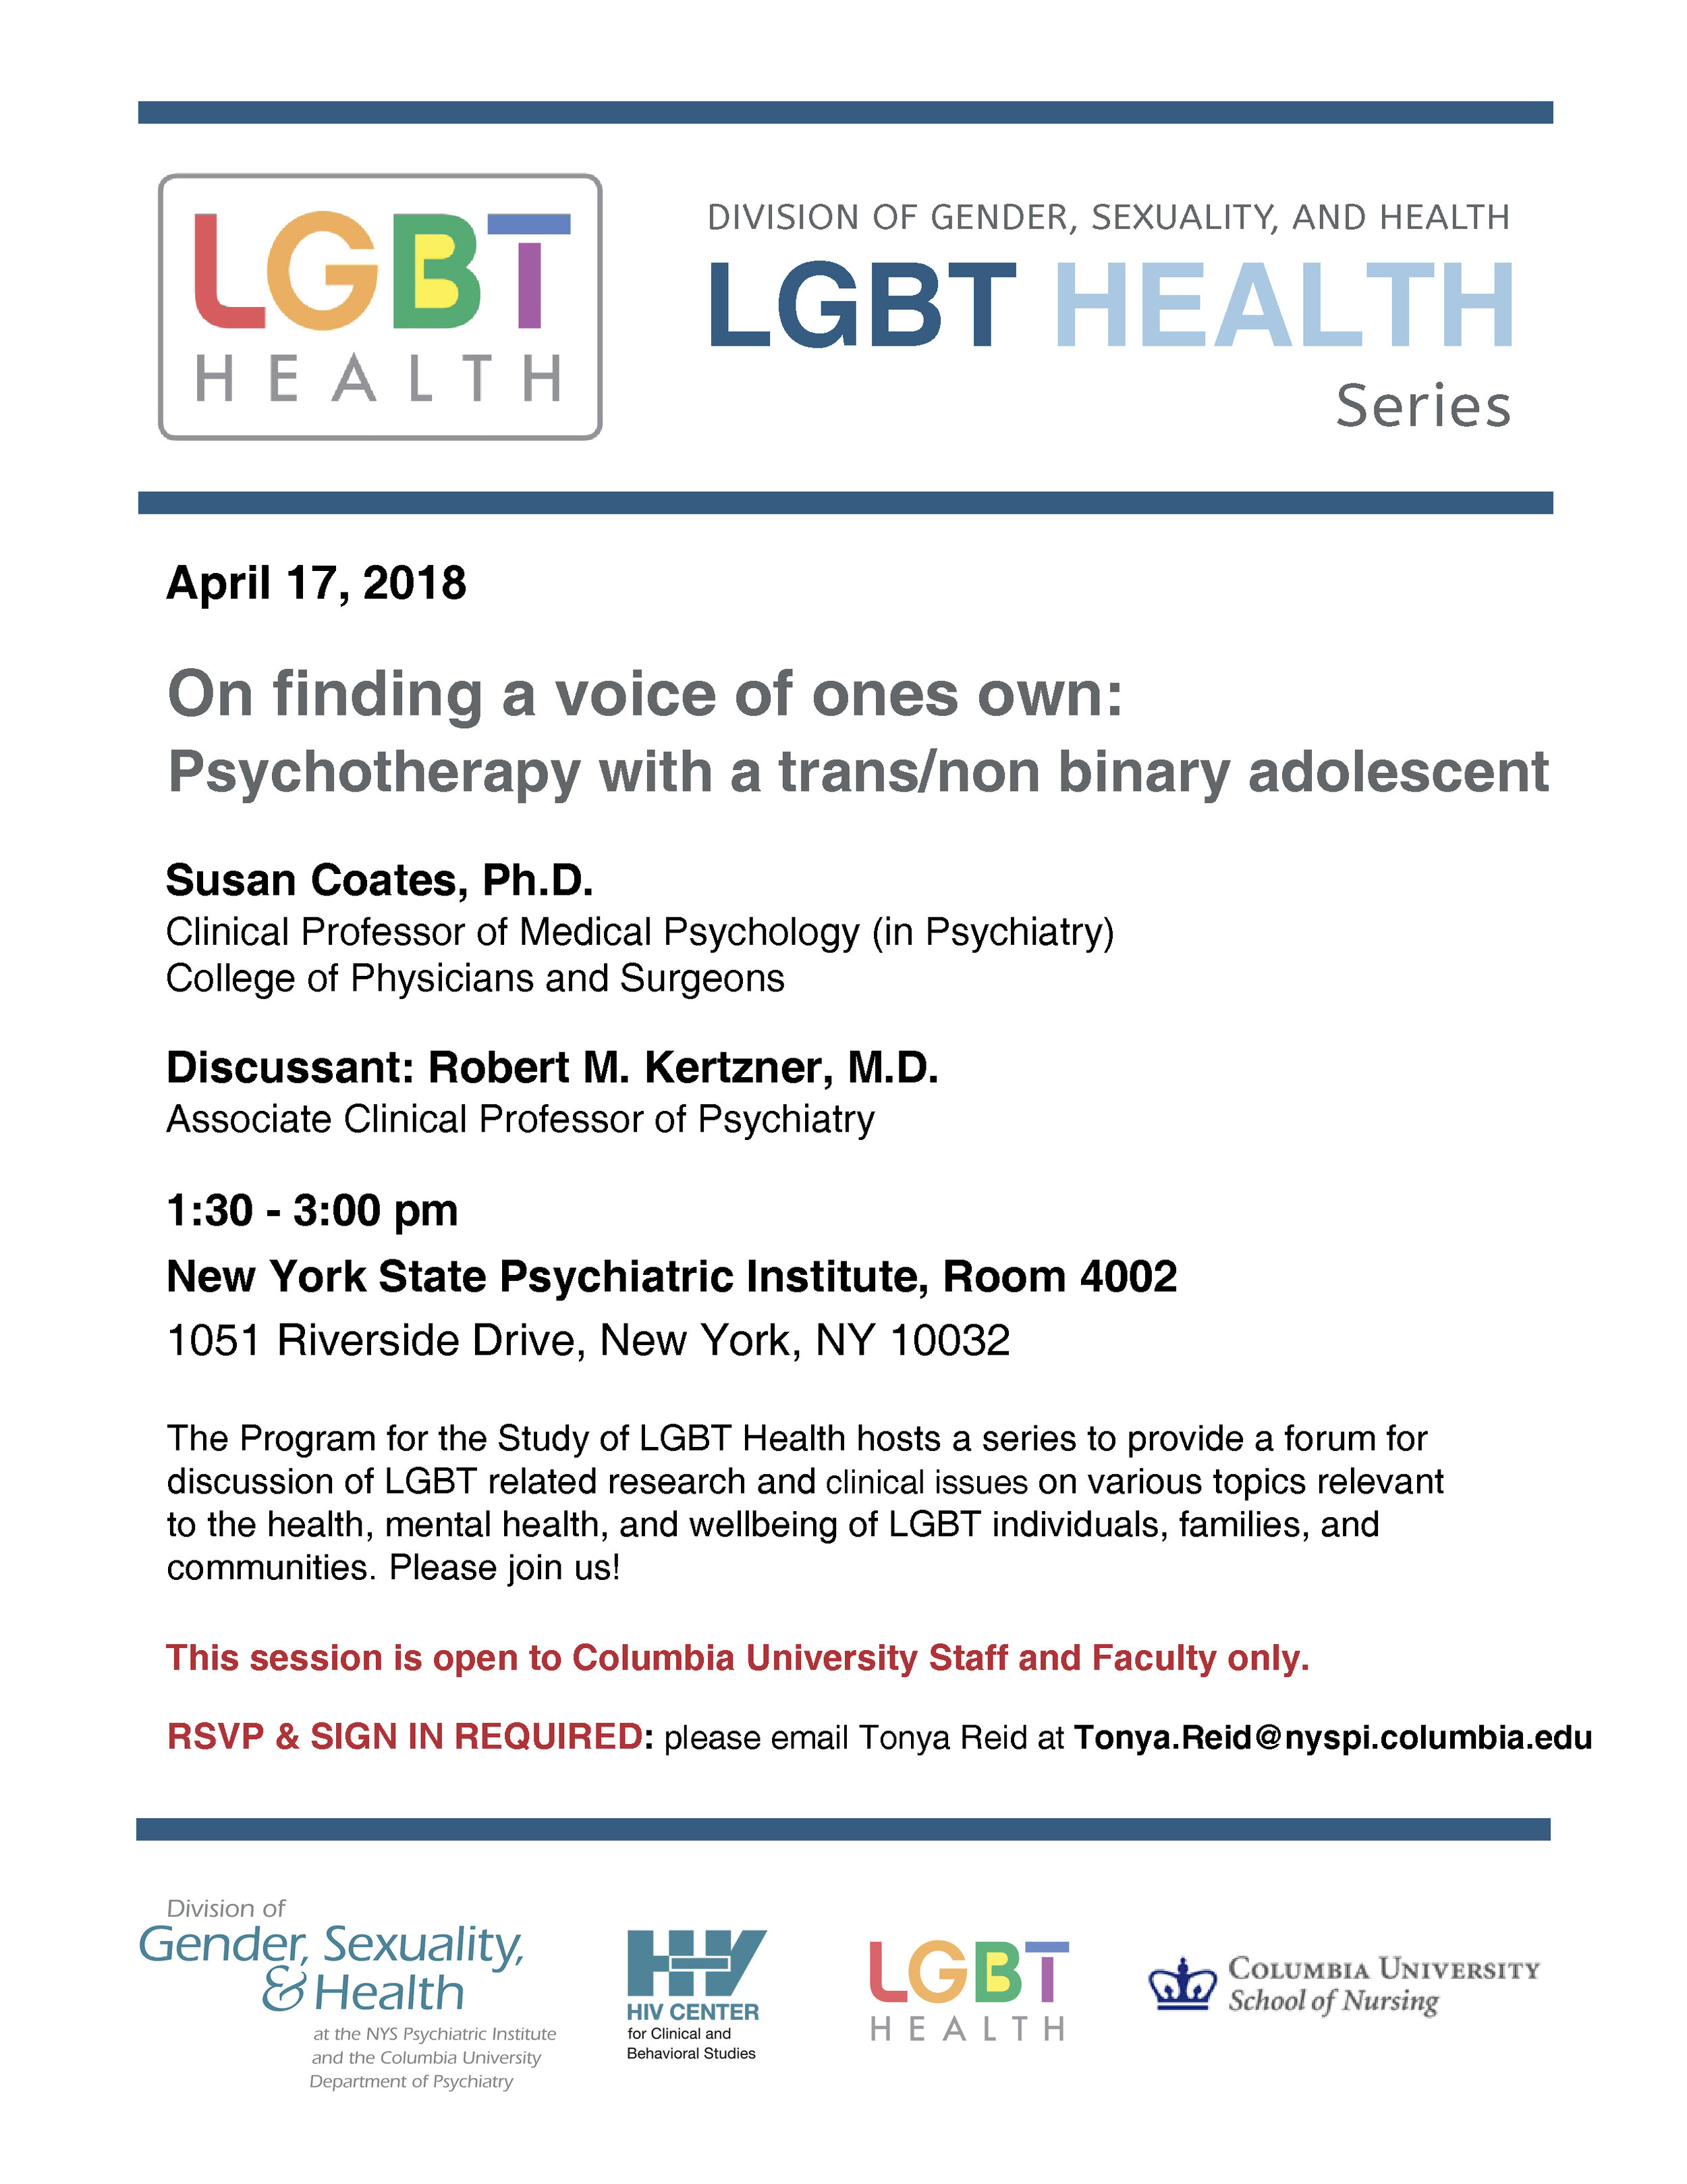 LGBT Health Series April 17 2018.jpg